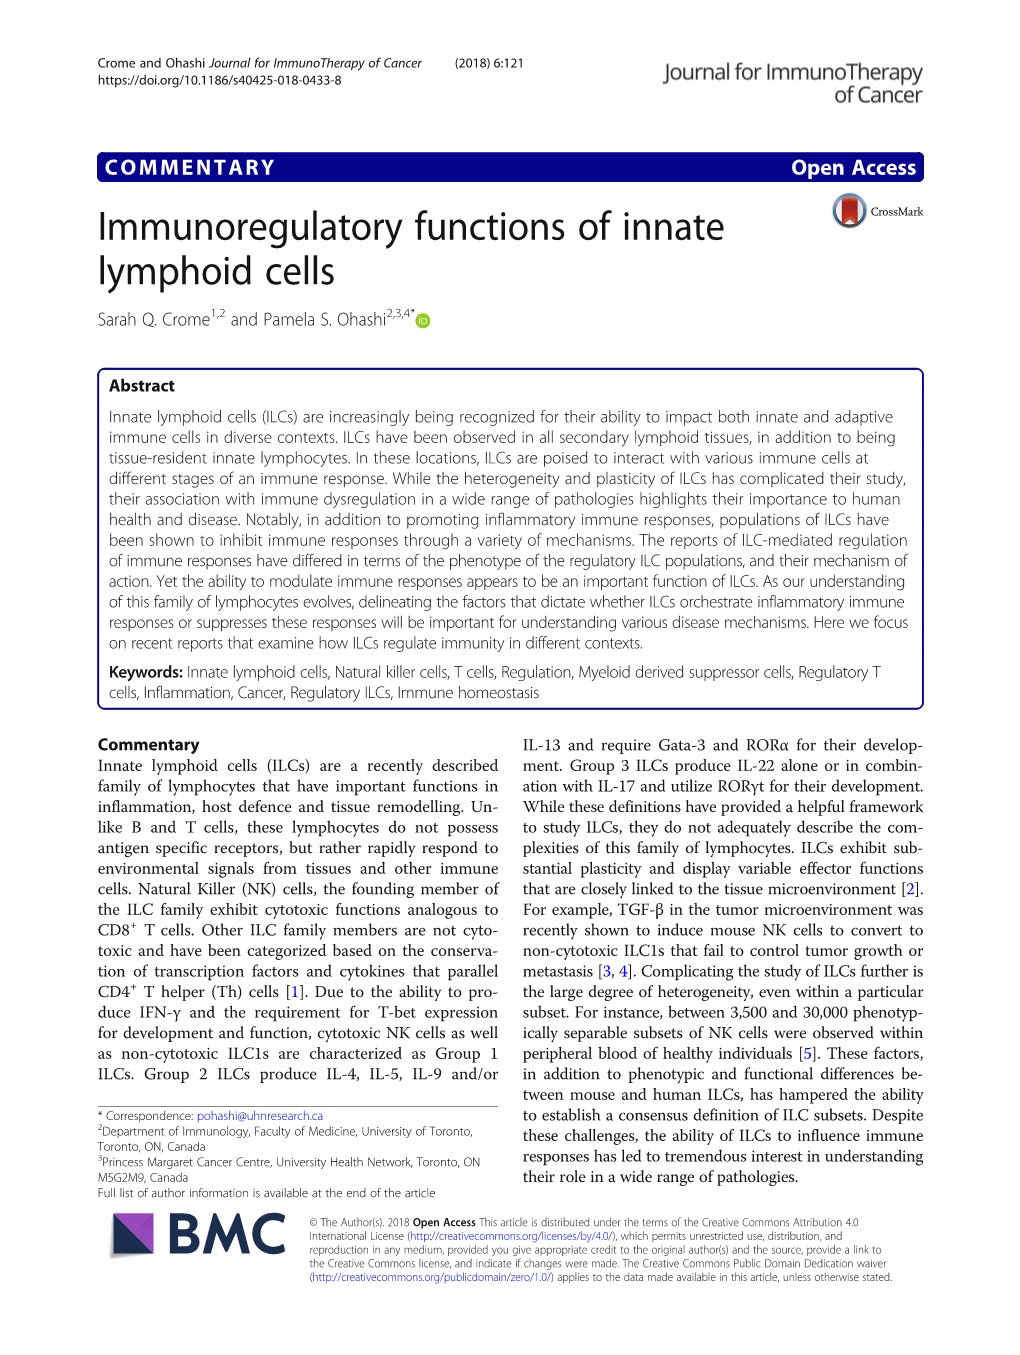 Immunoregulatory Functions of Innate Lymphoid Cells Sarah Q